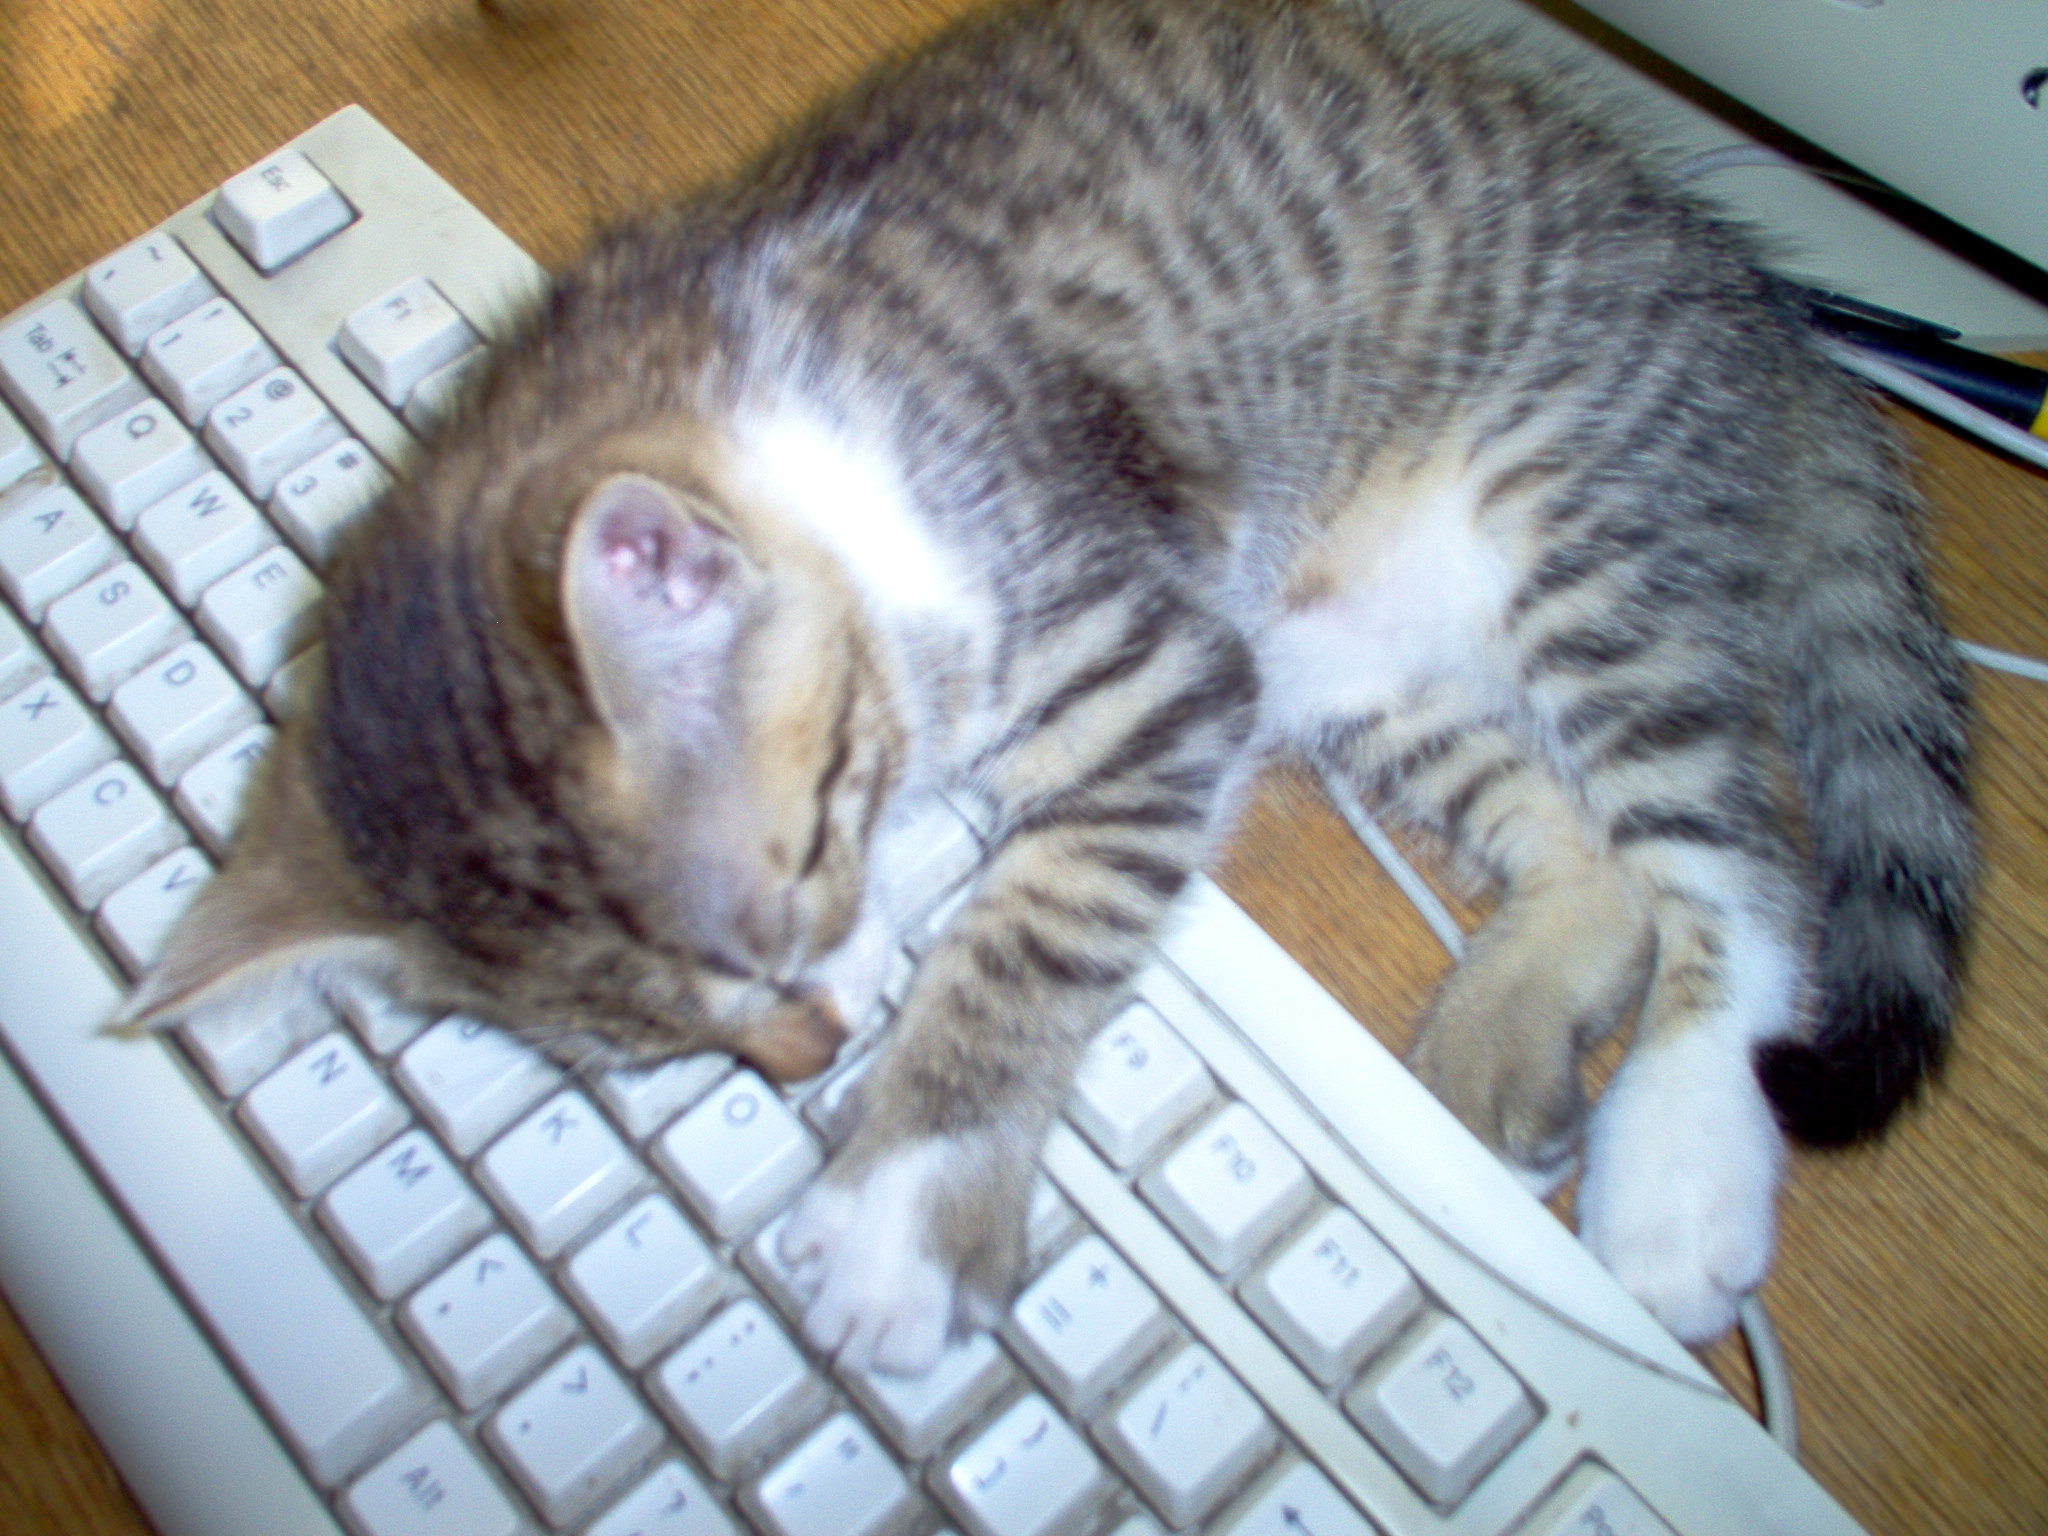 Tired kitten sleeping on a computer keyboard